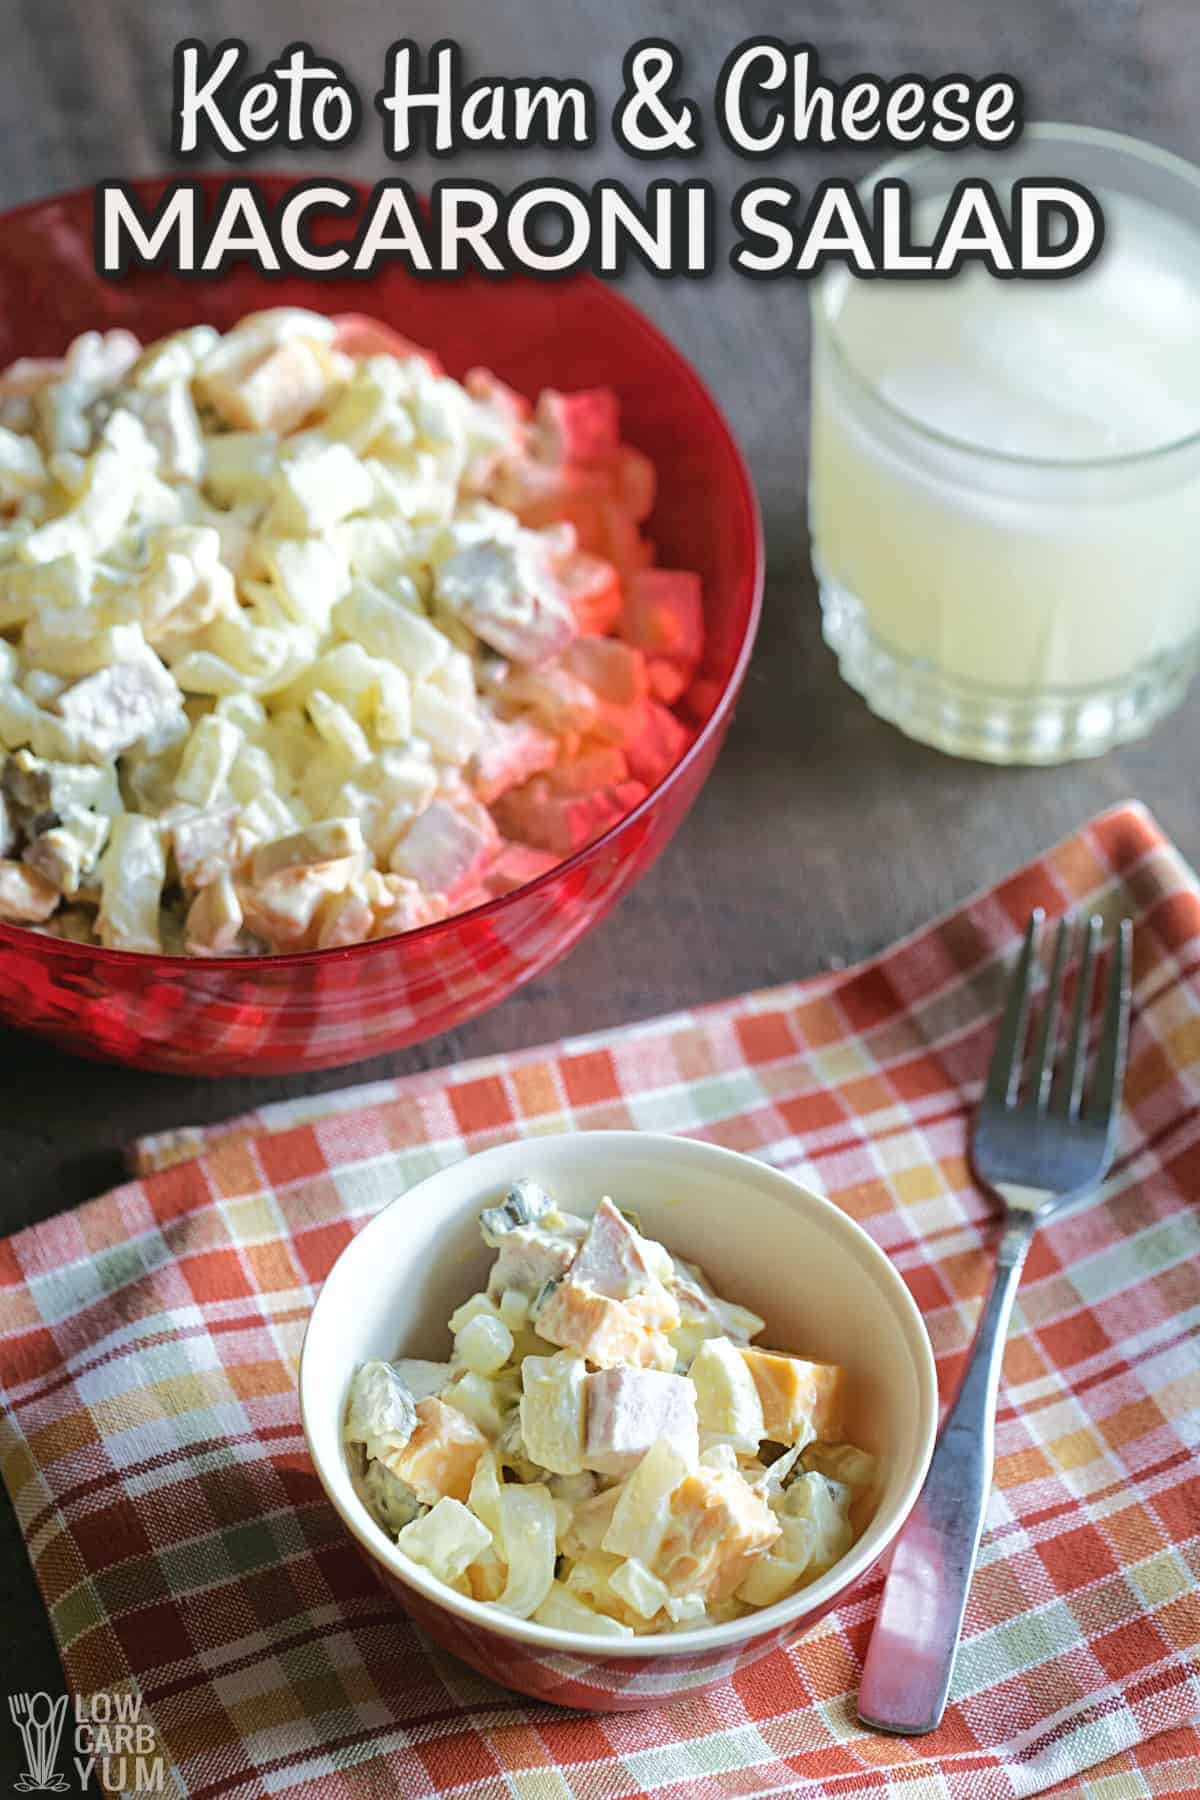 keto ham and cheese macaroni salad with text overlay.